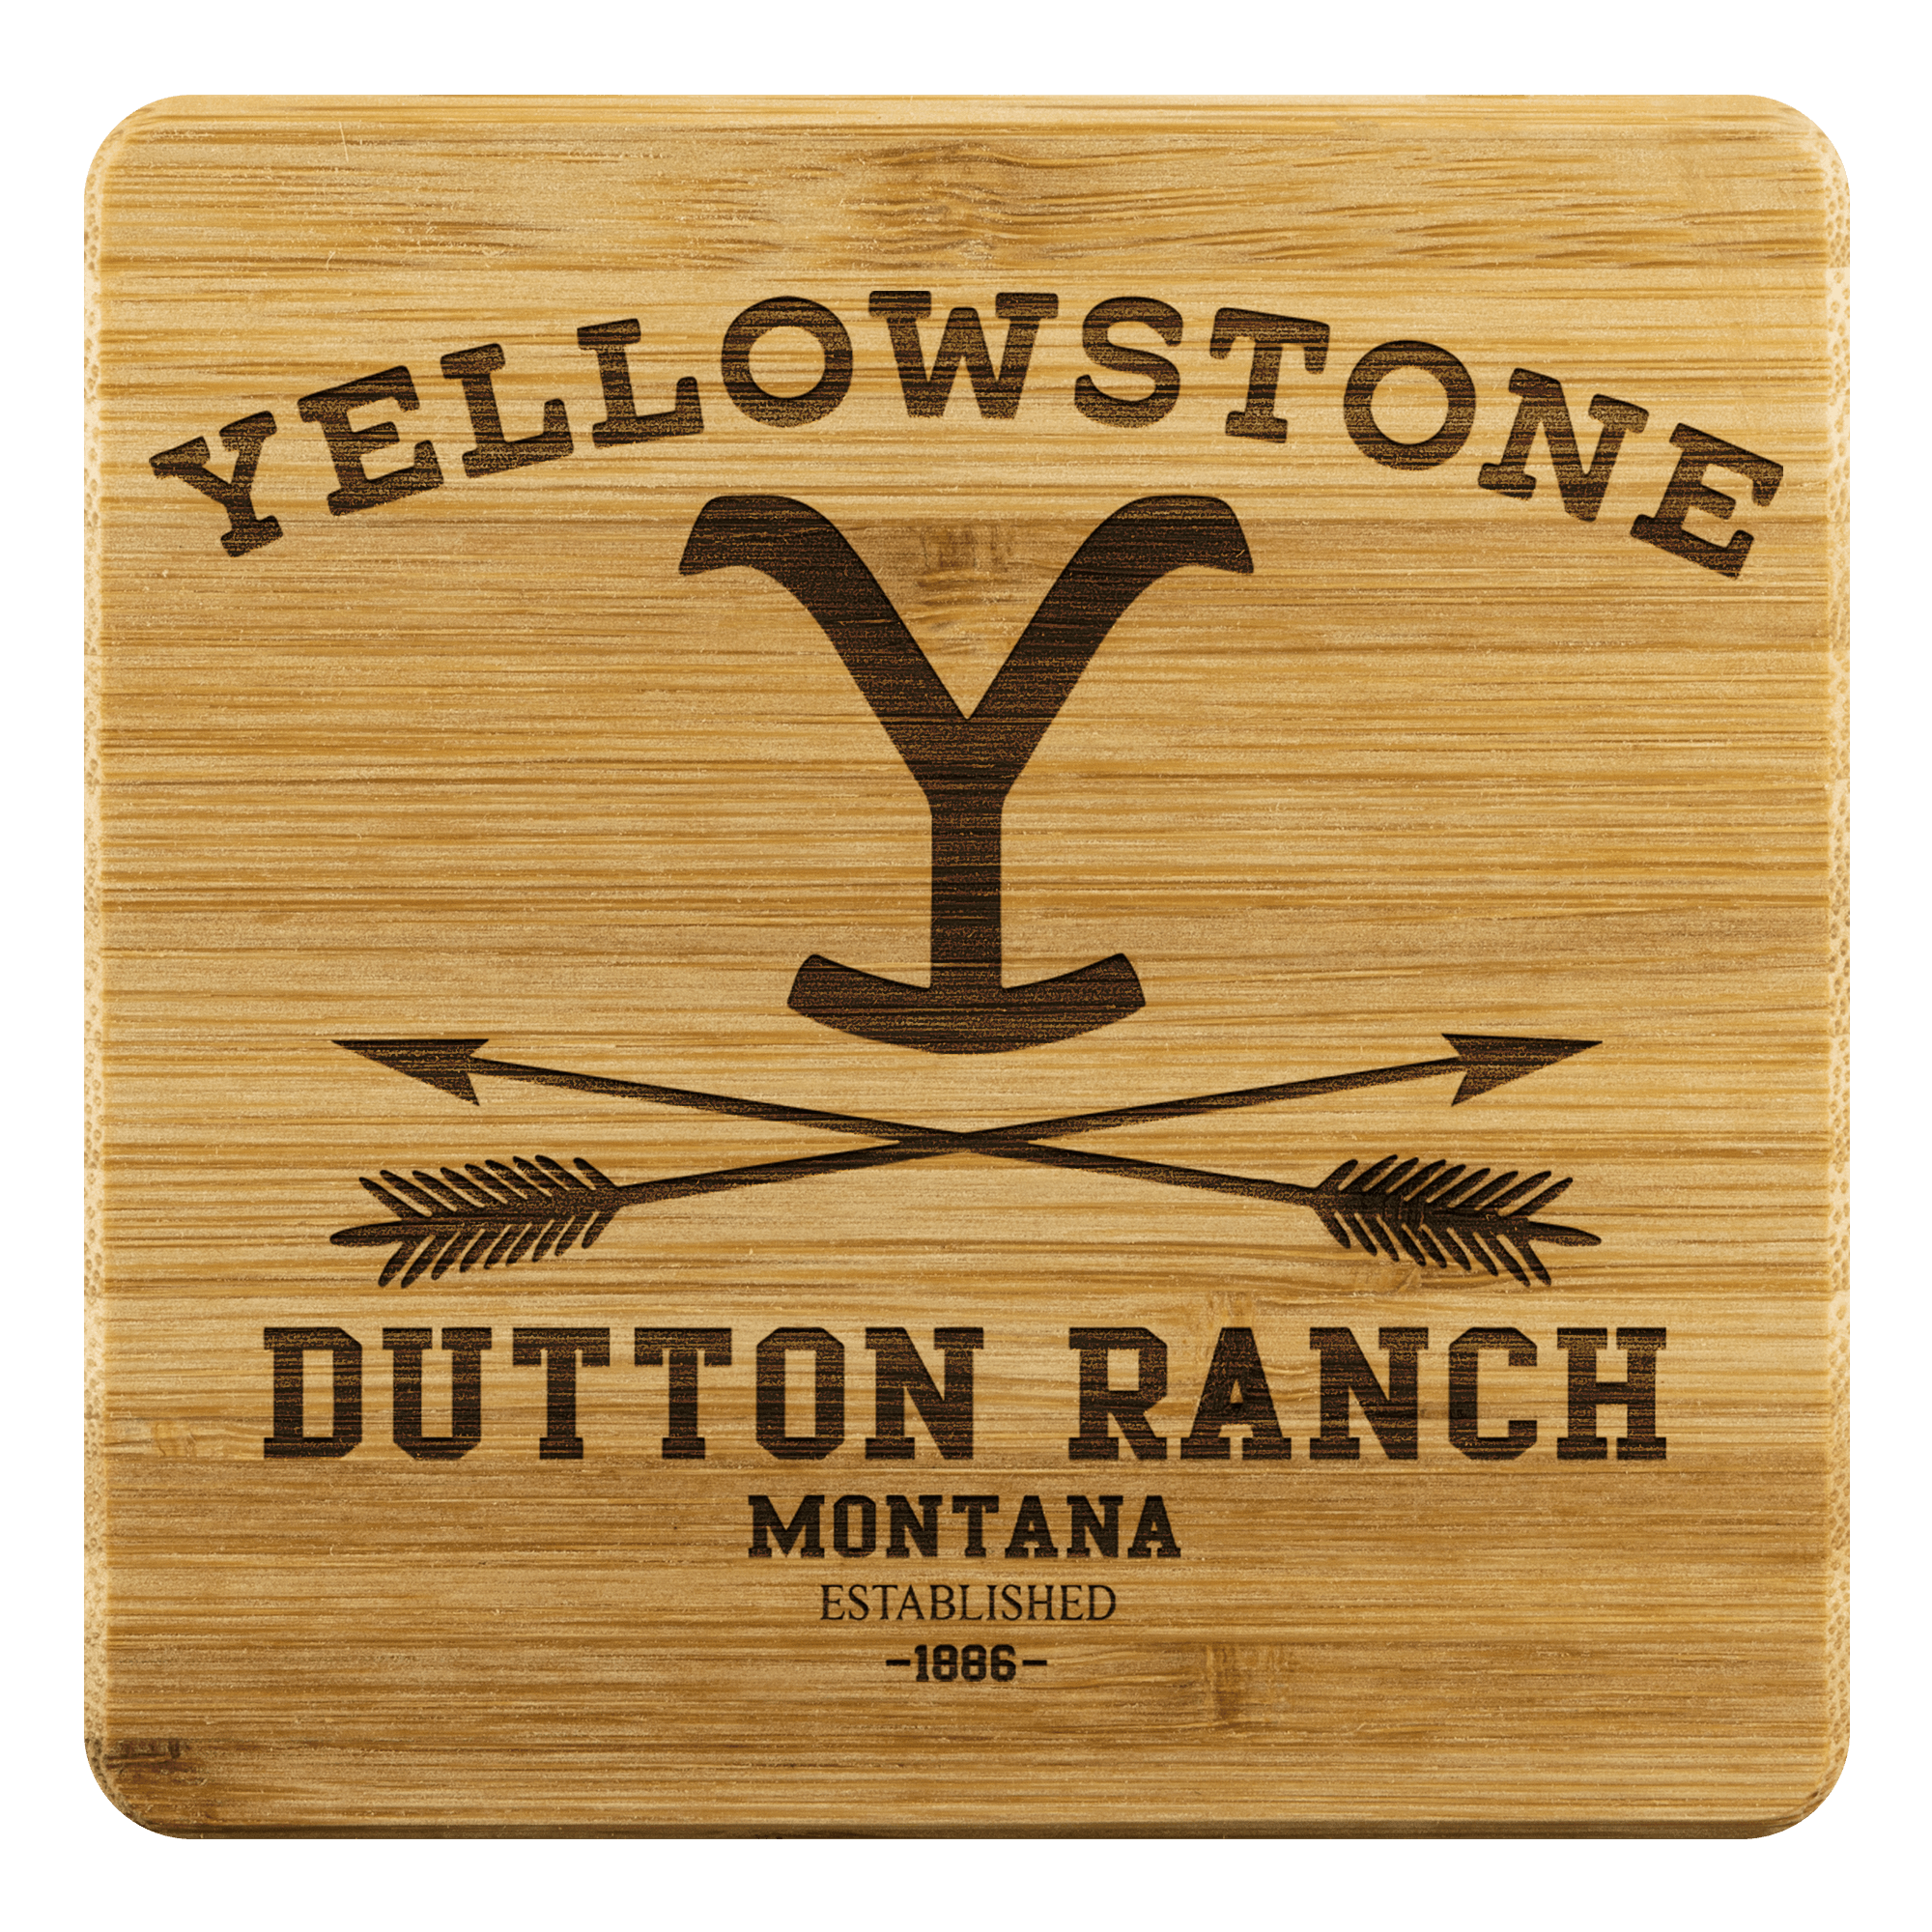 Yellowstone Dutton Ranch Montana Wood Wall Decor